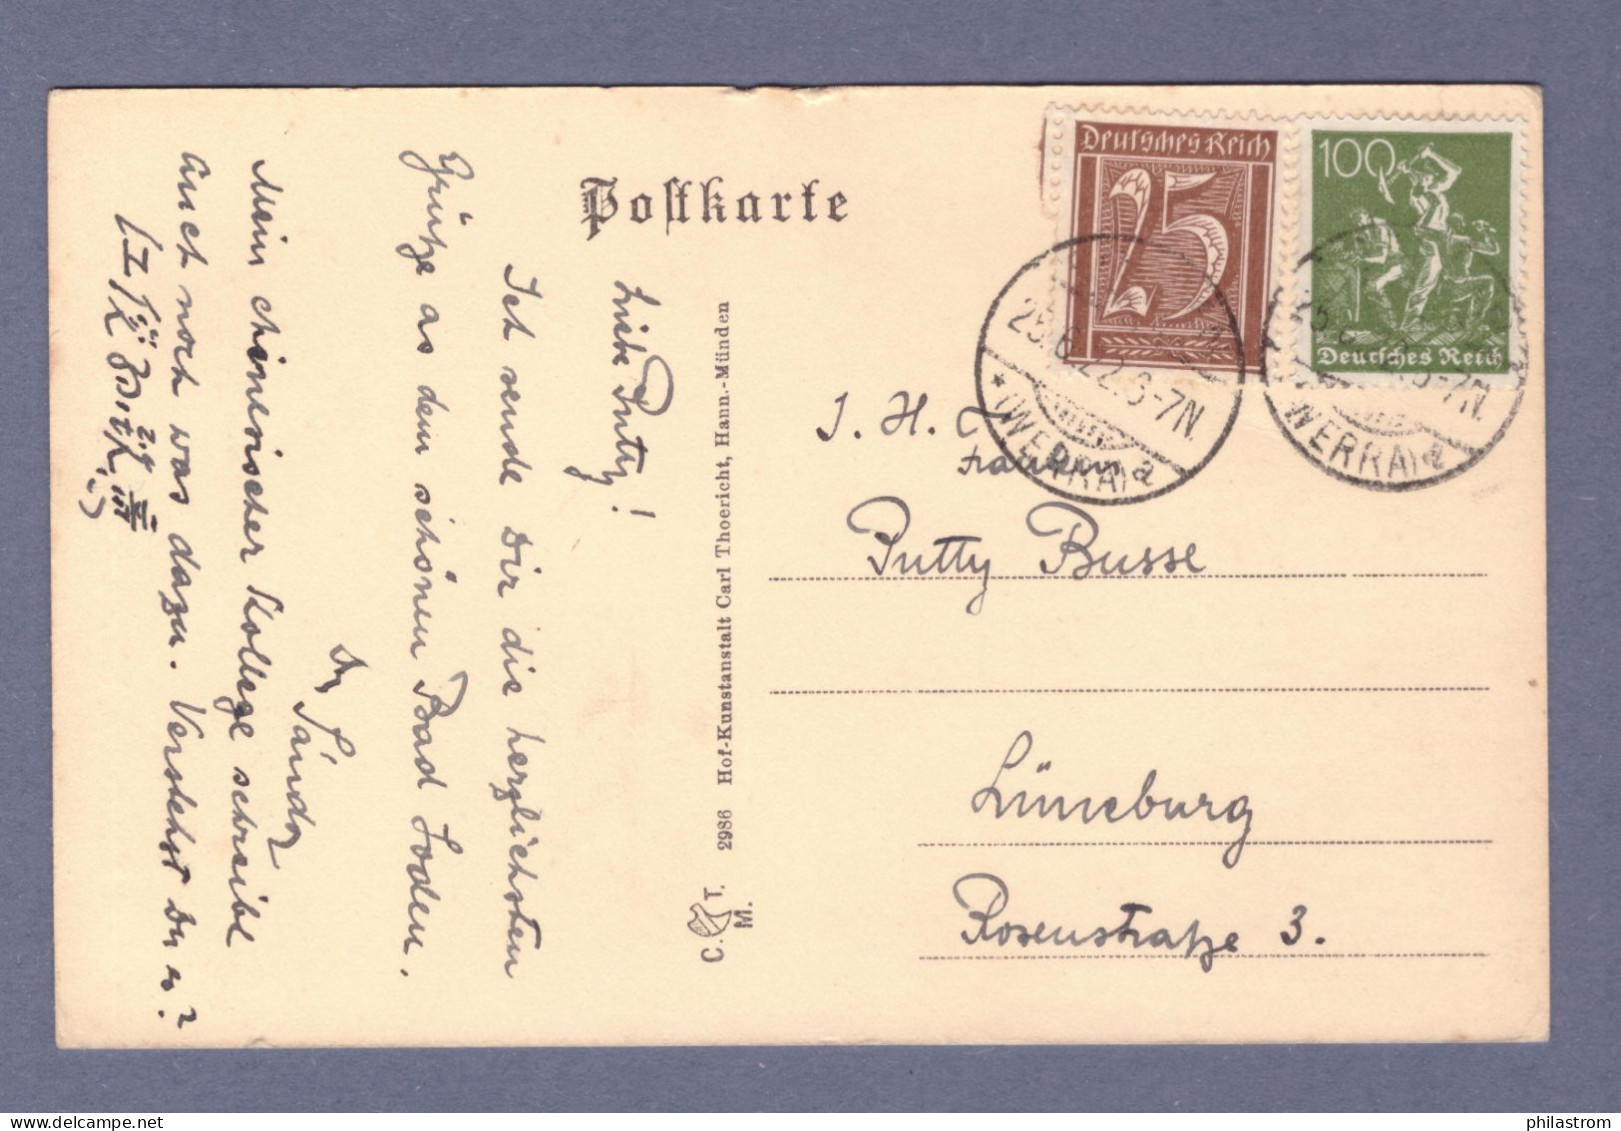 Weimar INFLA Postkarte AK (Bad Sooden A. Werra) 25.6.22 (CG13110-260) - Briefe U. Dokumente